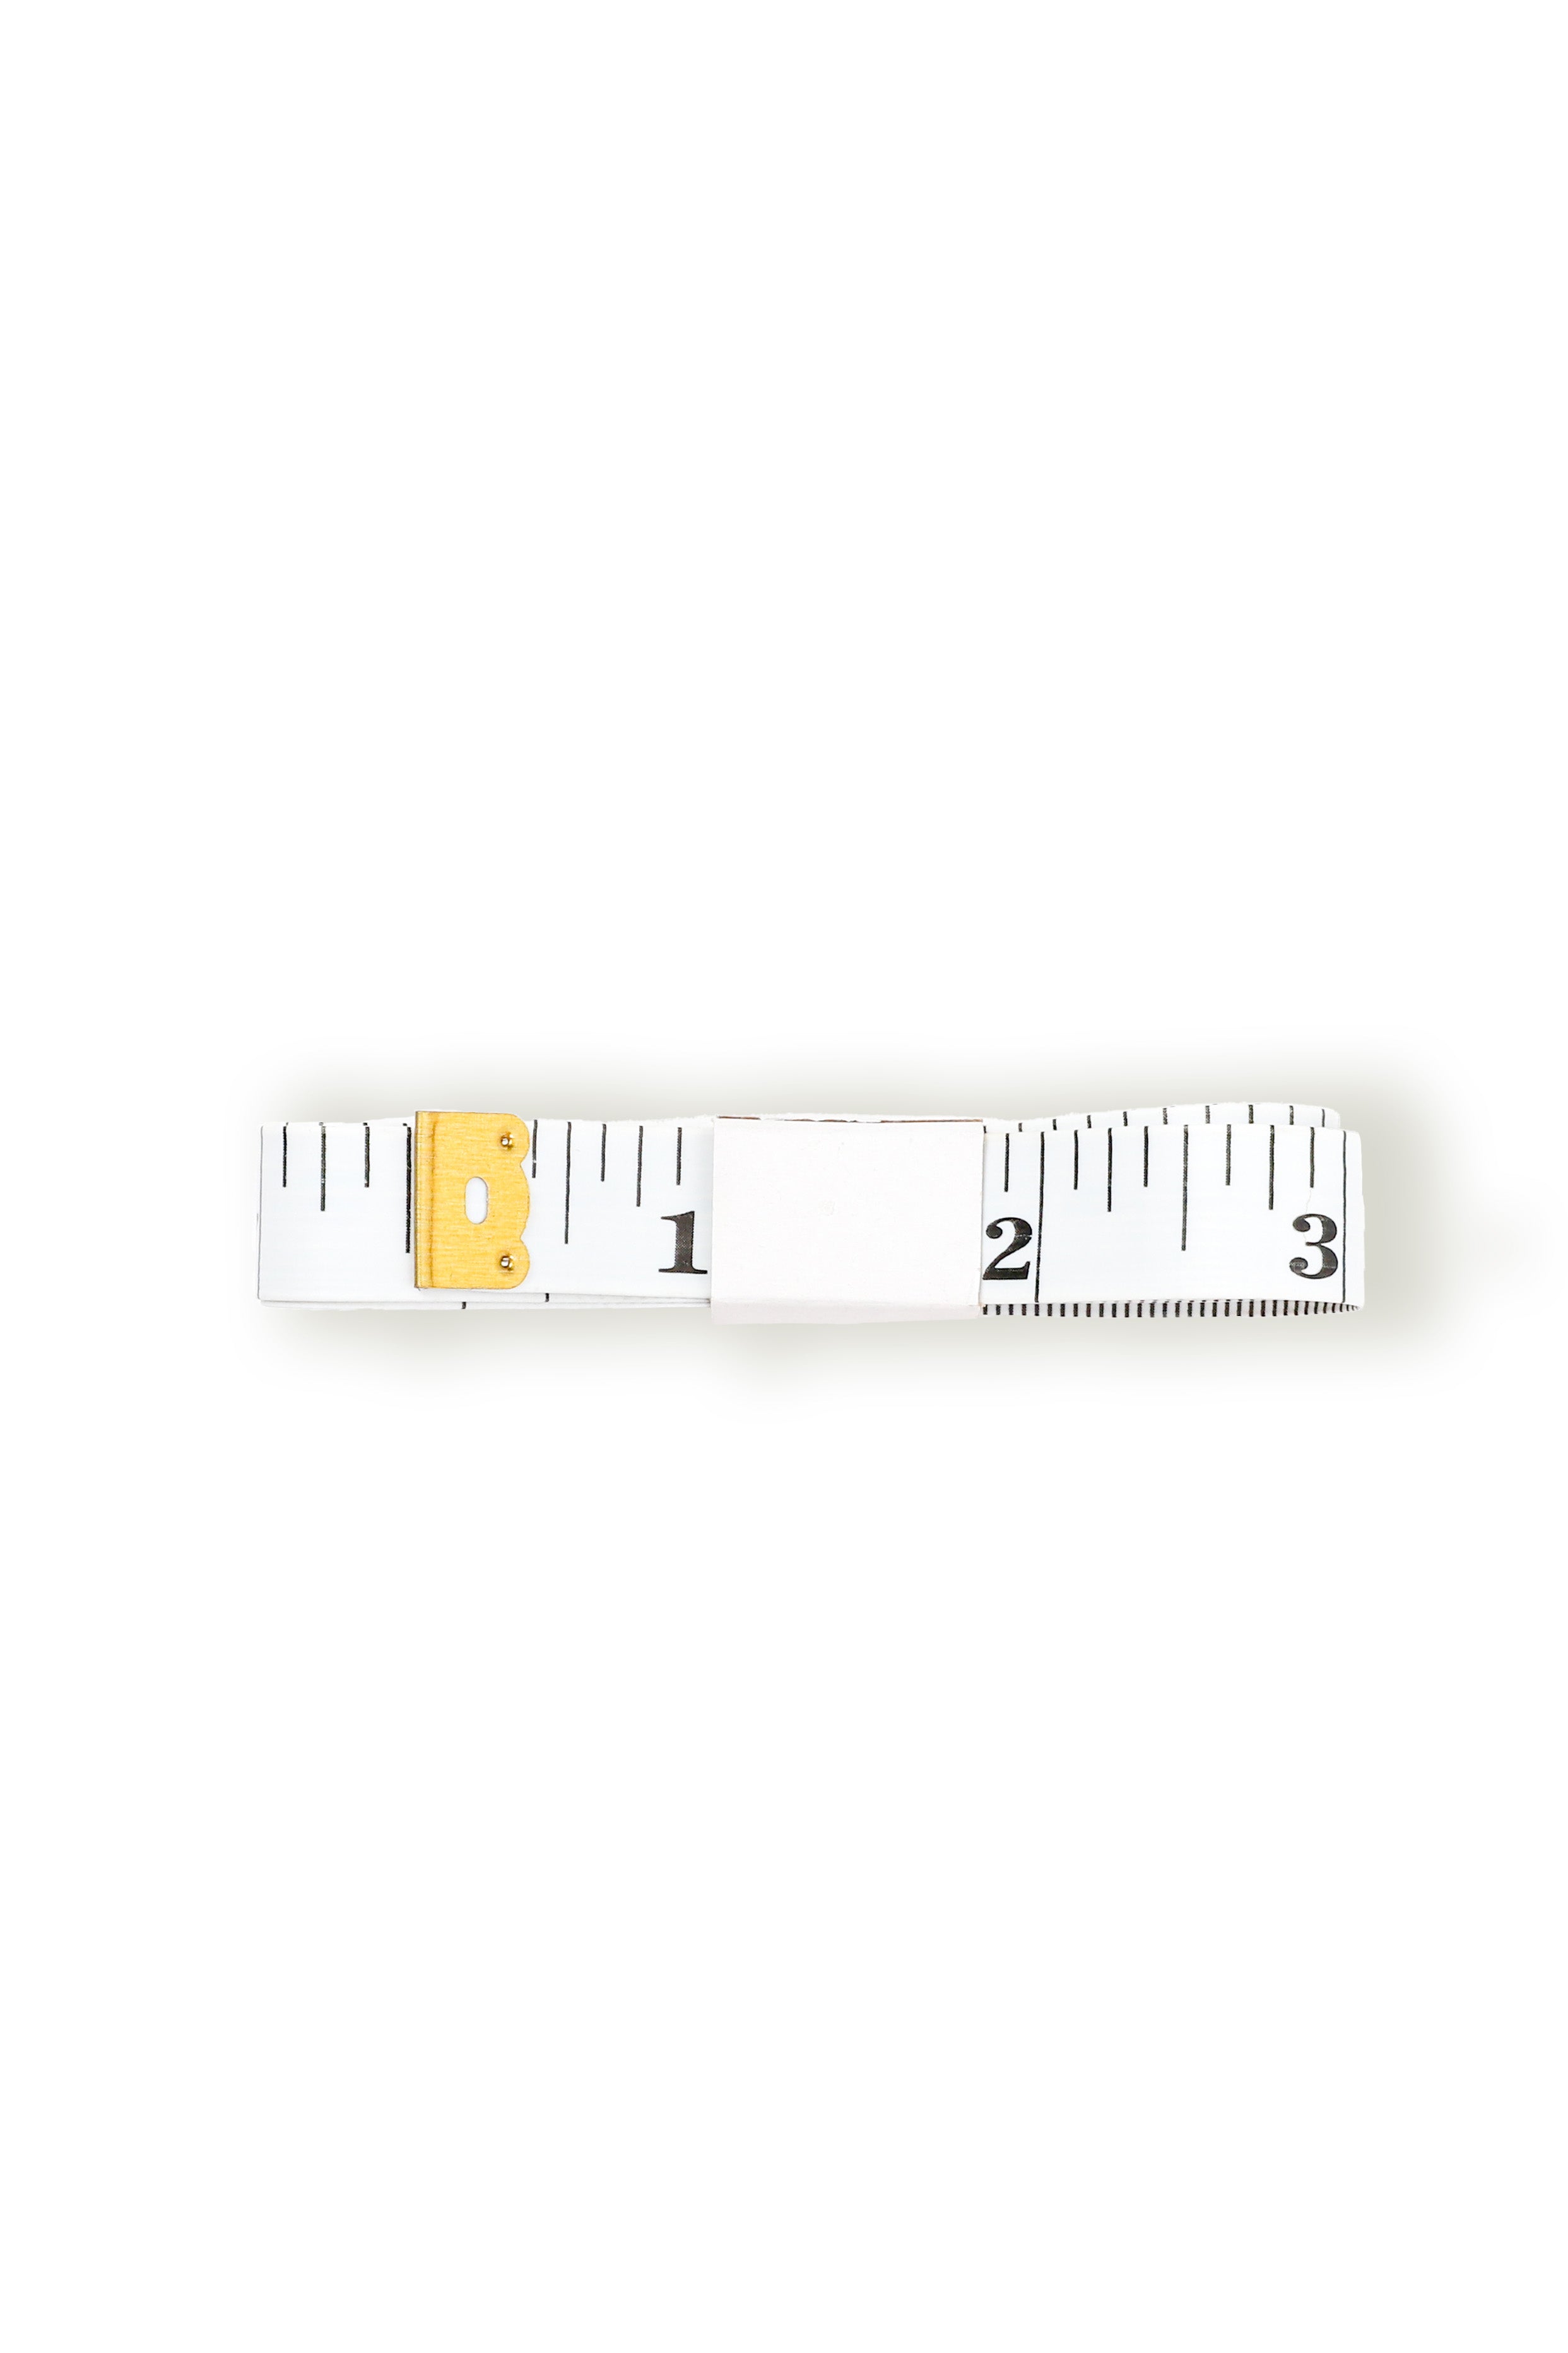 tape measurement